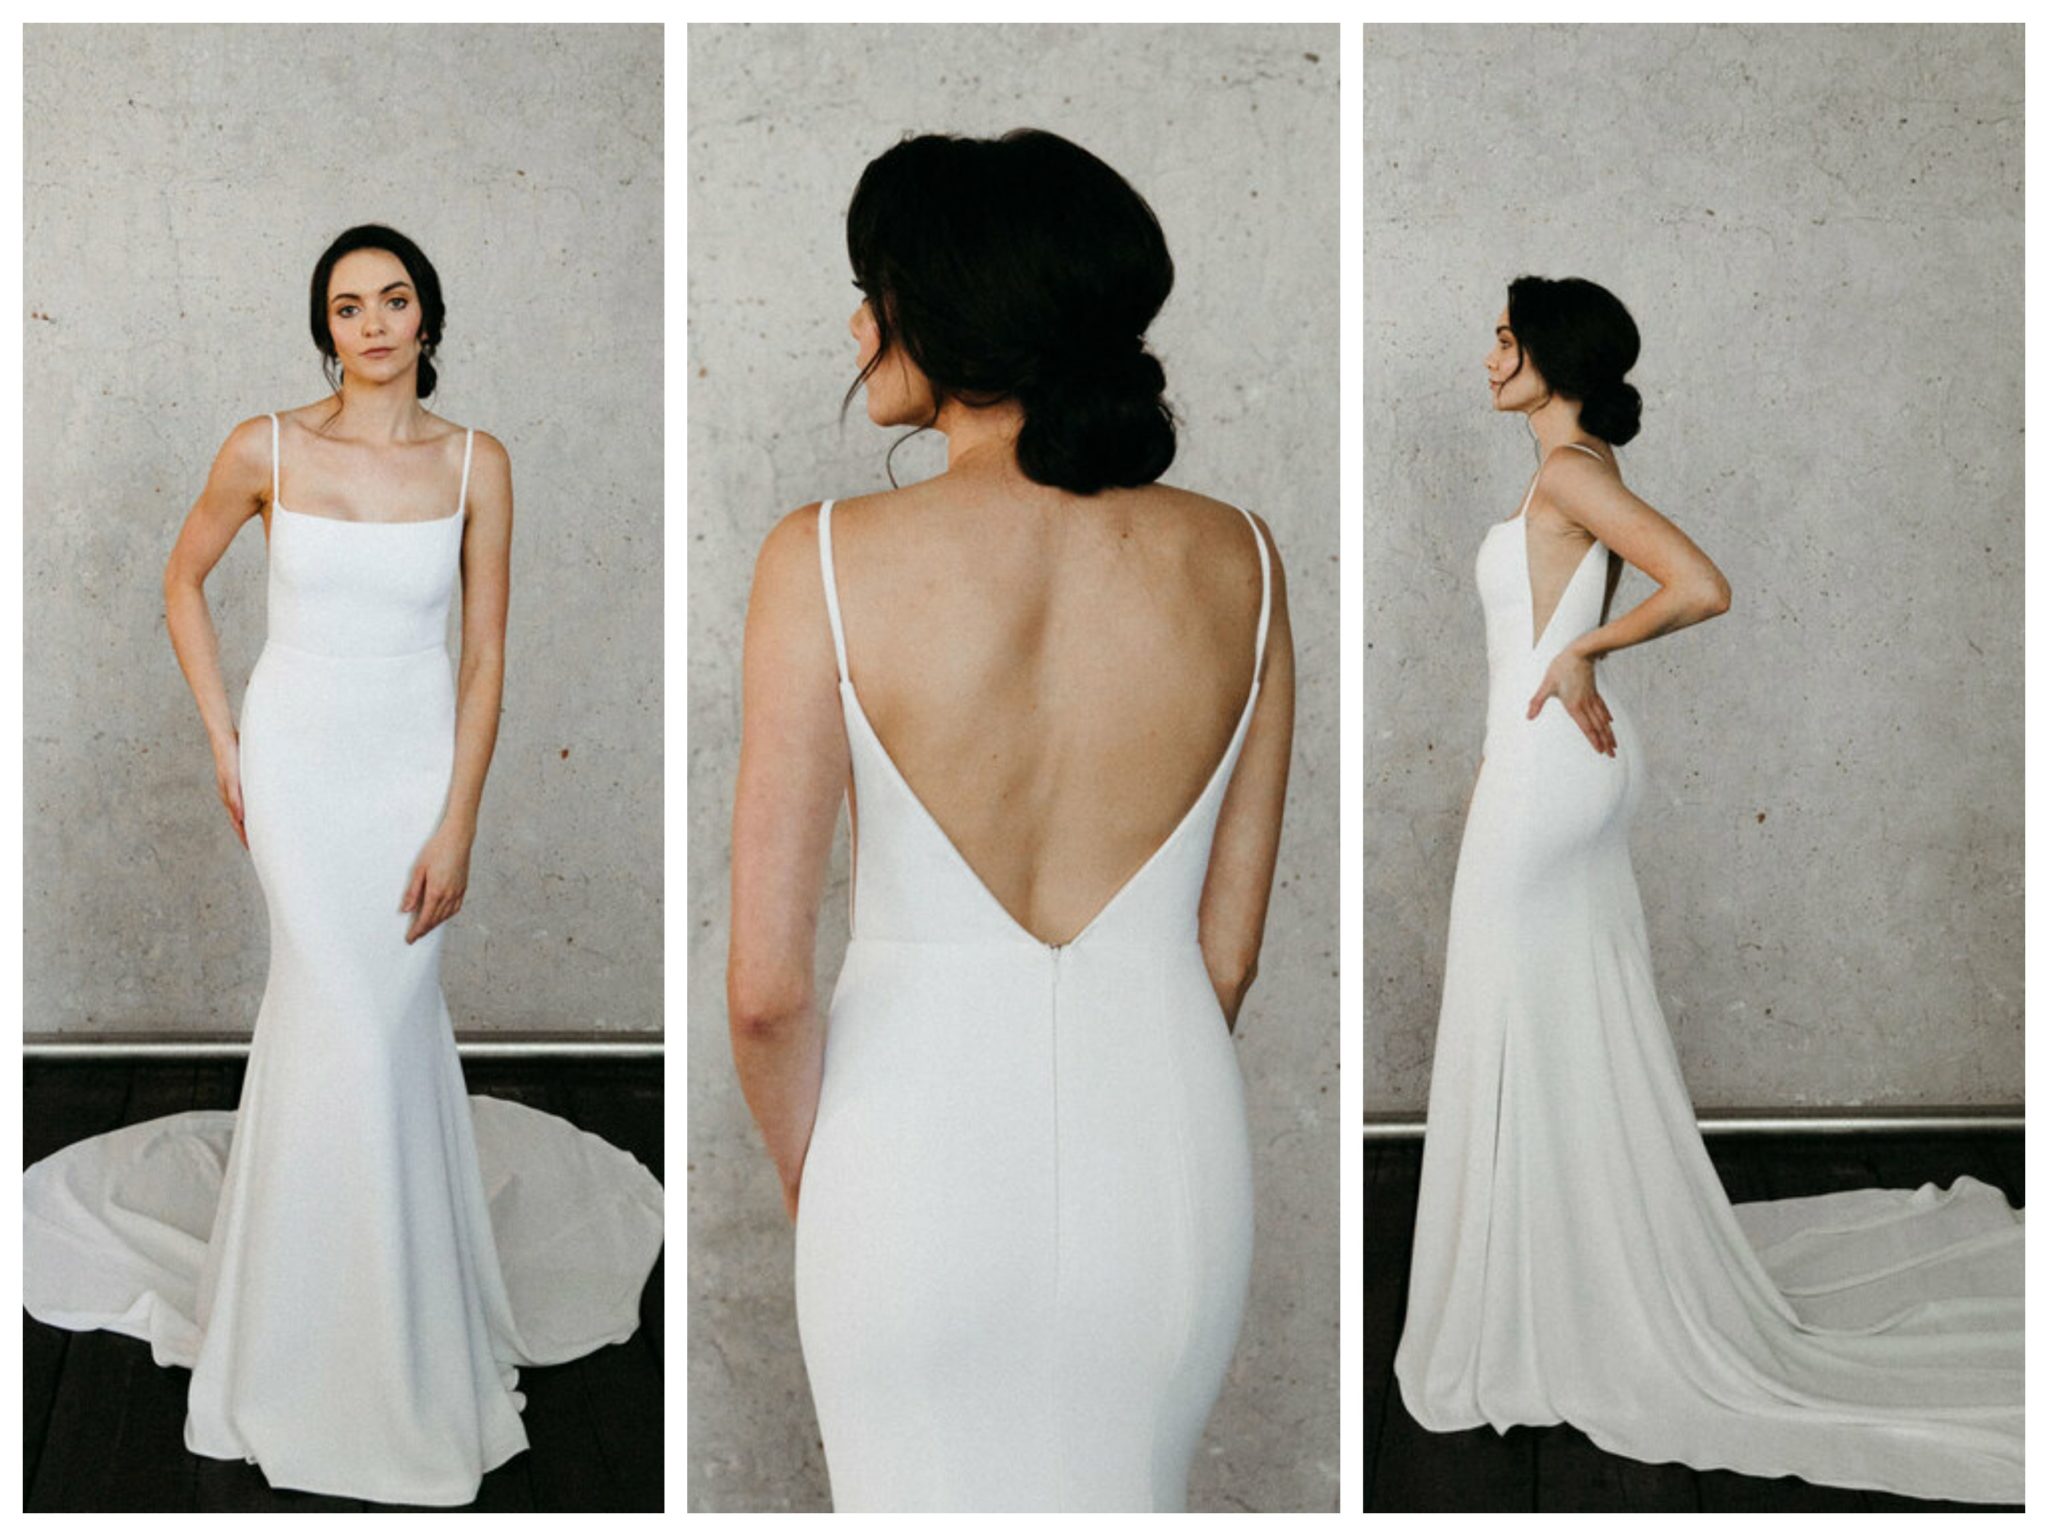 Wedding dresses for broad shoulders by top Los Angeles bridal shop, Love and Lace Bridal Salon: Alyssa Kristin's Nathalie